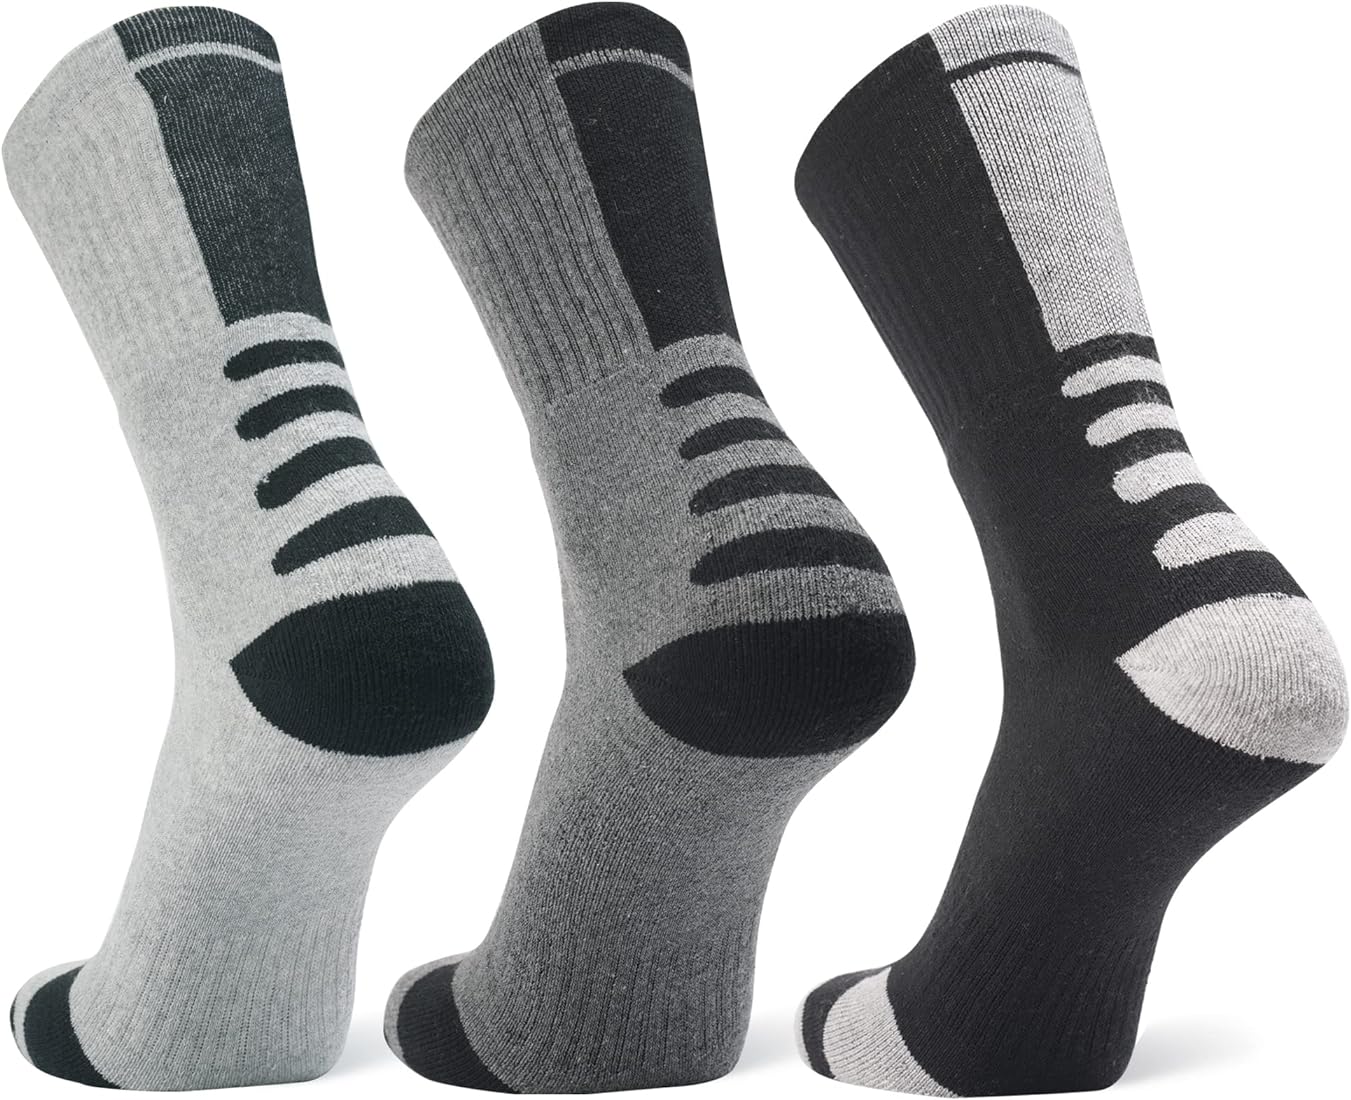 Terry Sports Socks